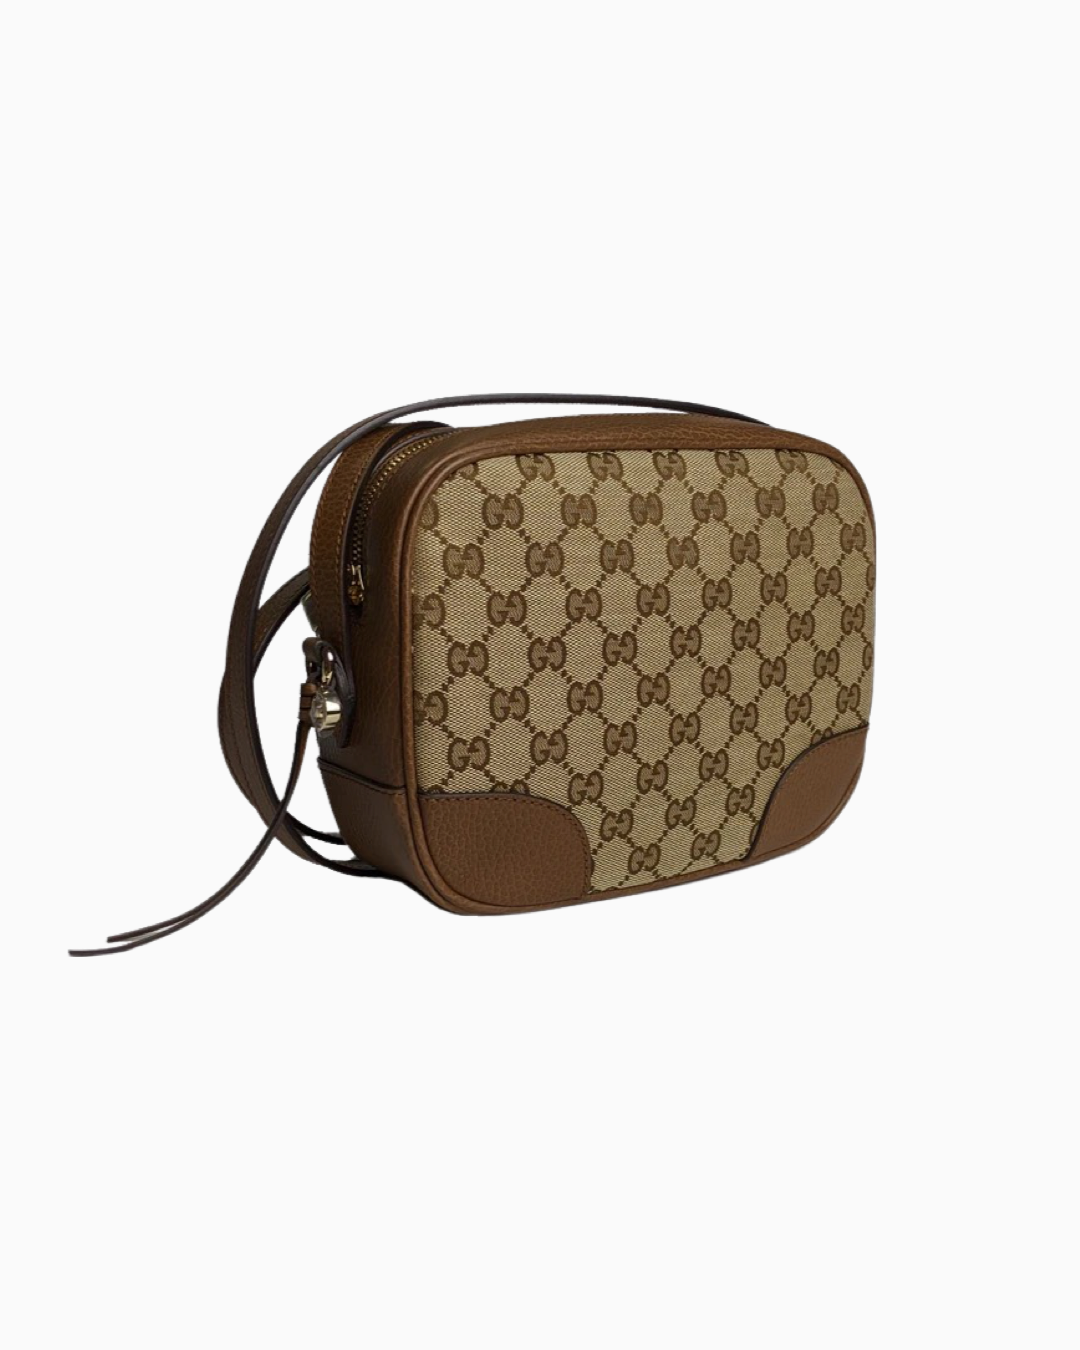 Gucci Cross-Body Bags for Women, Camera Bags